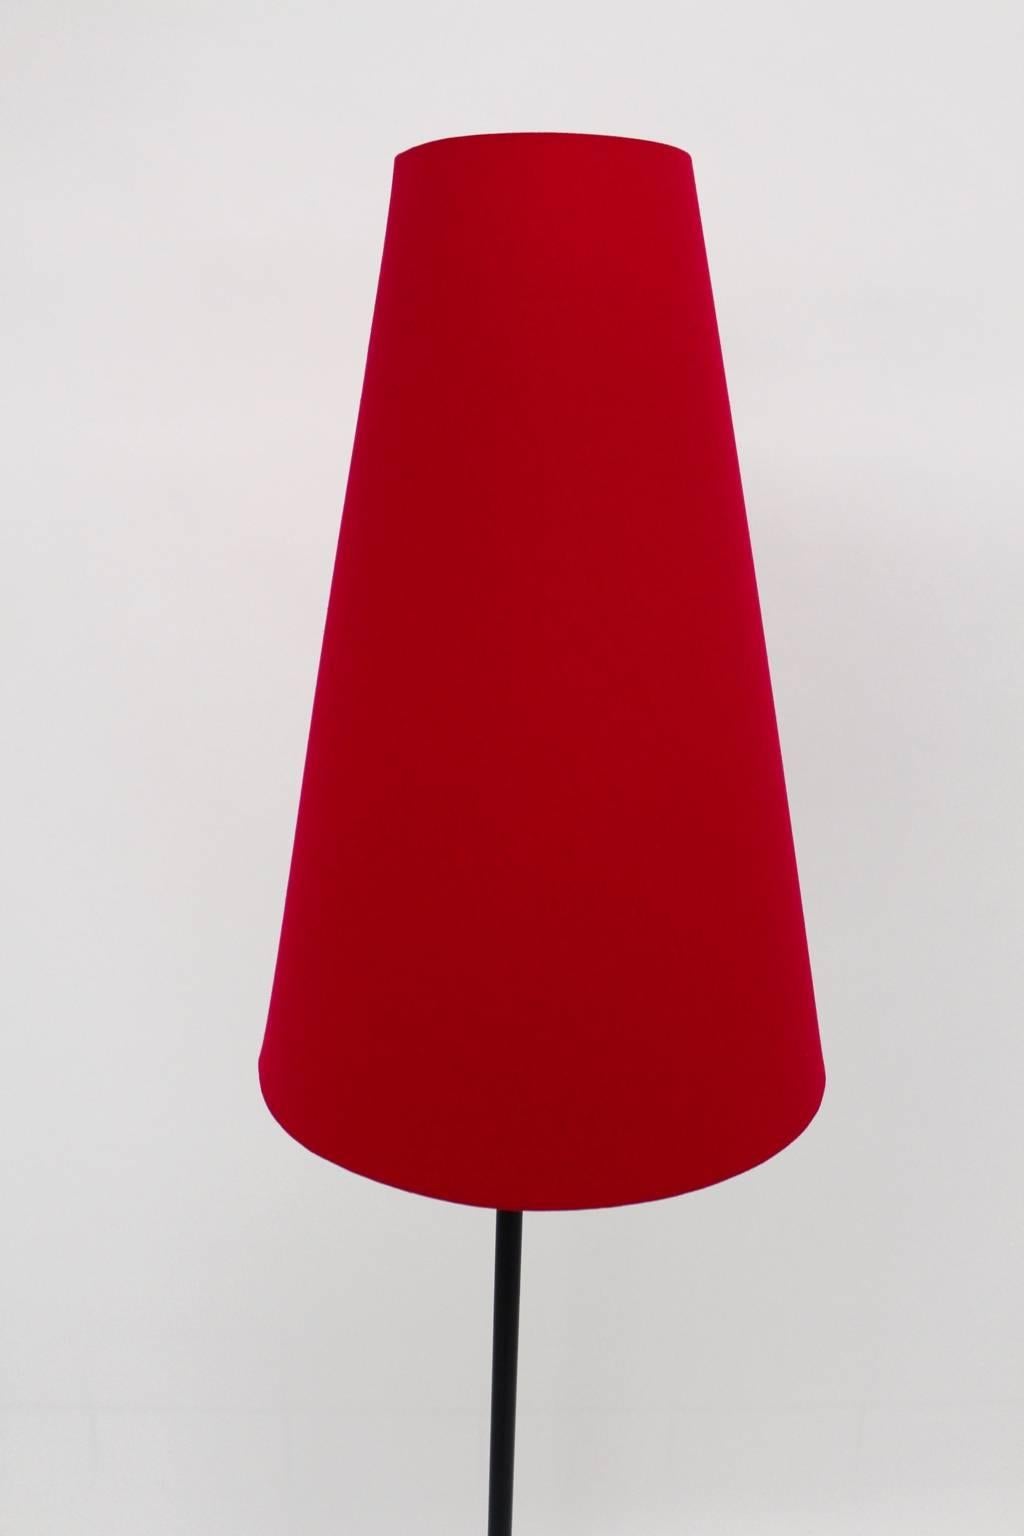 red tripod floor lamp